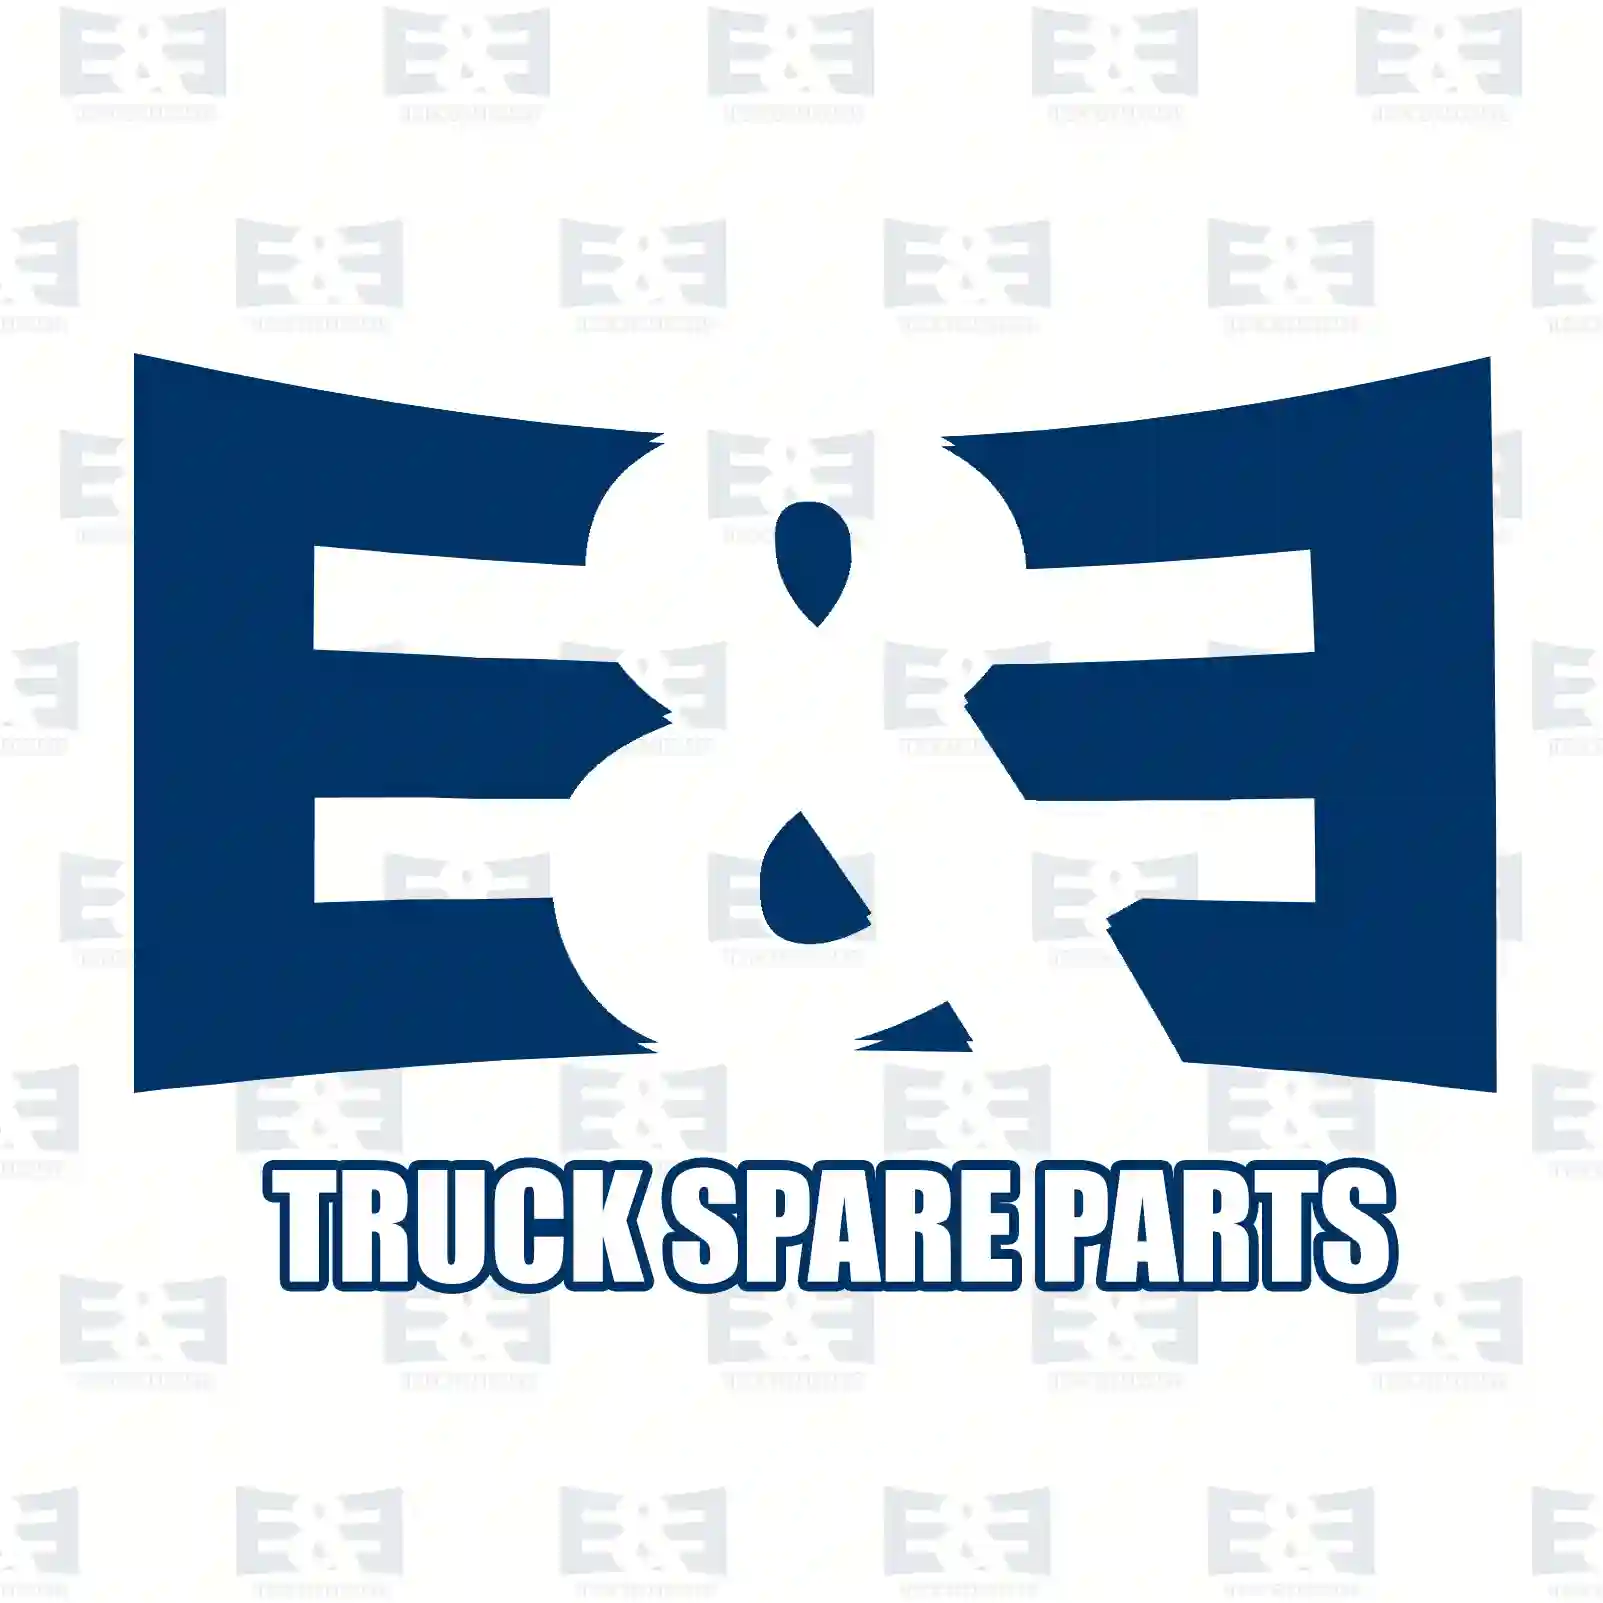 V-belt kit, 2E2285479, 61321356, 99444353, 06580422244, 06580432244, 06580472244, 06580722442, 06580732442, 51968206022, 51968206052, 0079974592 ||  2E2285479 E&E Truck Spare Parts | Truck Spare Parts, Auotomotive Spare Parts V-belt kit, 2E2285479, 61321356, 99444353, 06580422244, 06580432244, 06580472244, 06580722442, 06580732442, 51968206022, 51968206052, 0079974592 ||  2E2285479 E&E Truck Spare Parts | Truck Spare Parts, Auotomotive Spare Parts